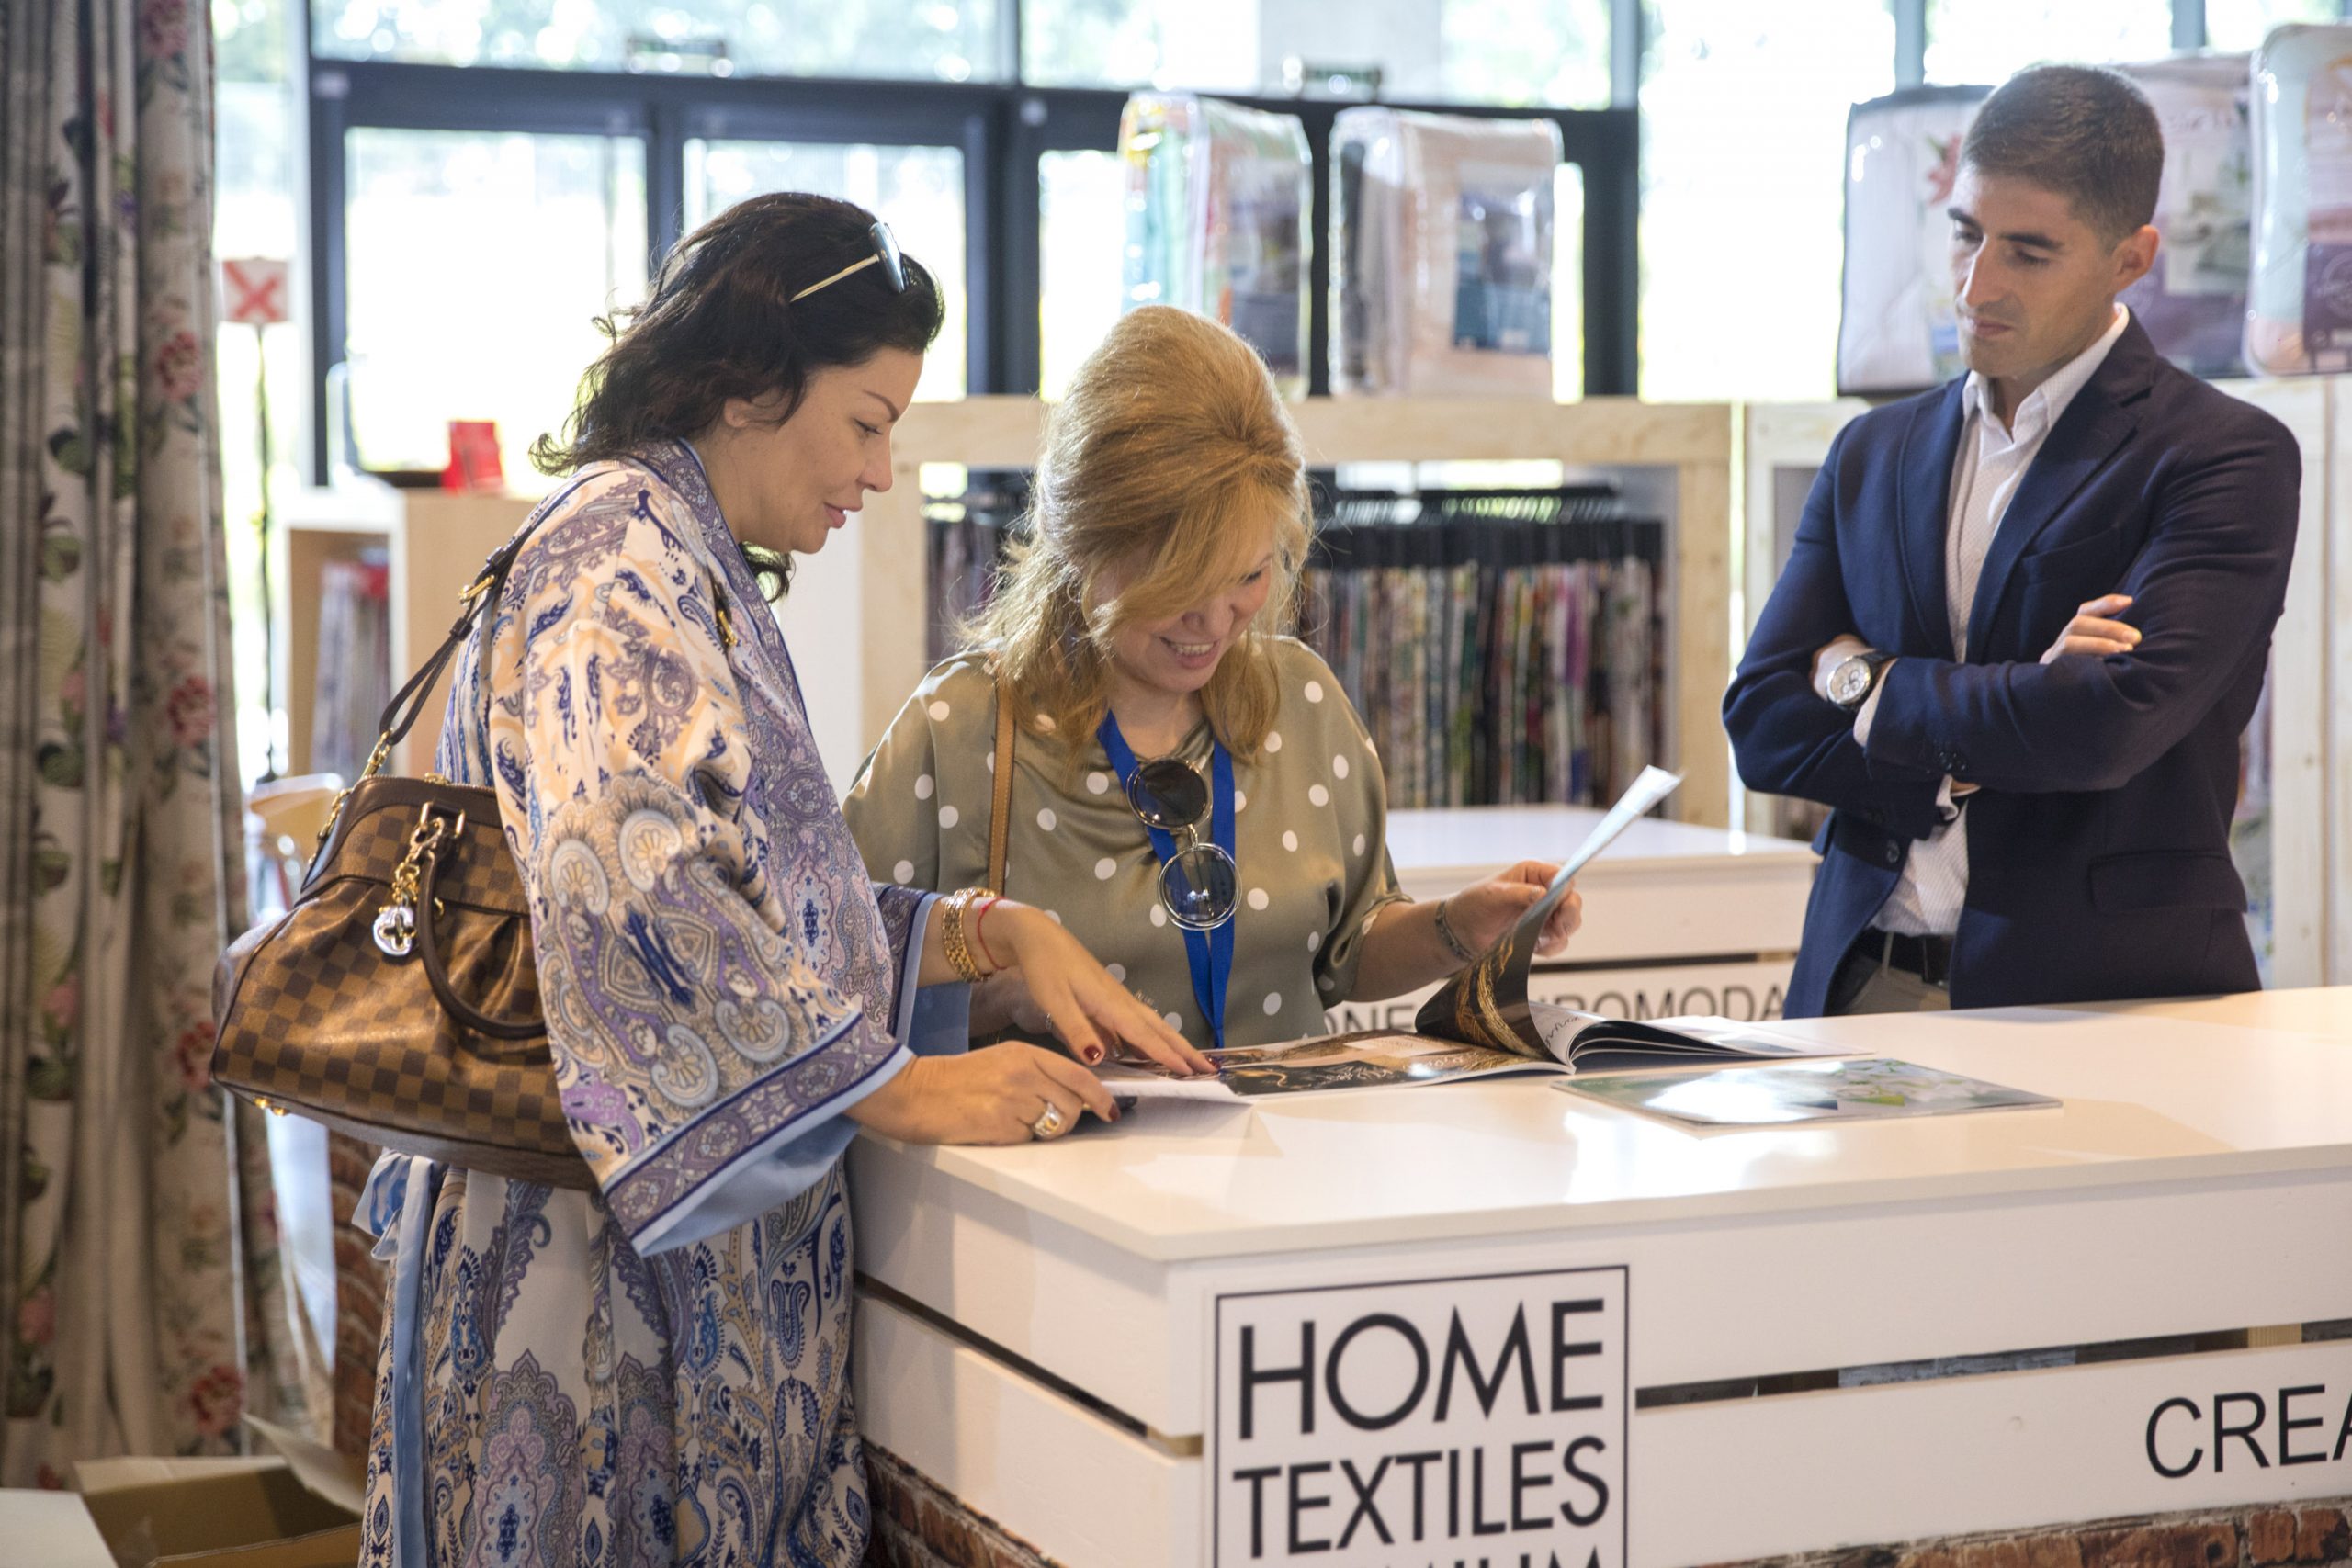 En este momento estás viendo El sector textil vuelve a Valencia con un 30% más de oferta expositiva en Home Textiles Premium by Textilhogar